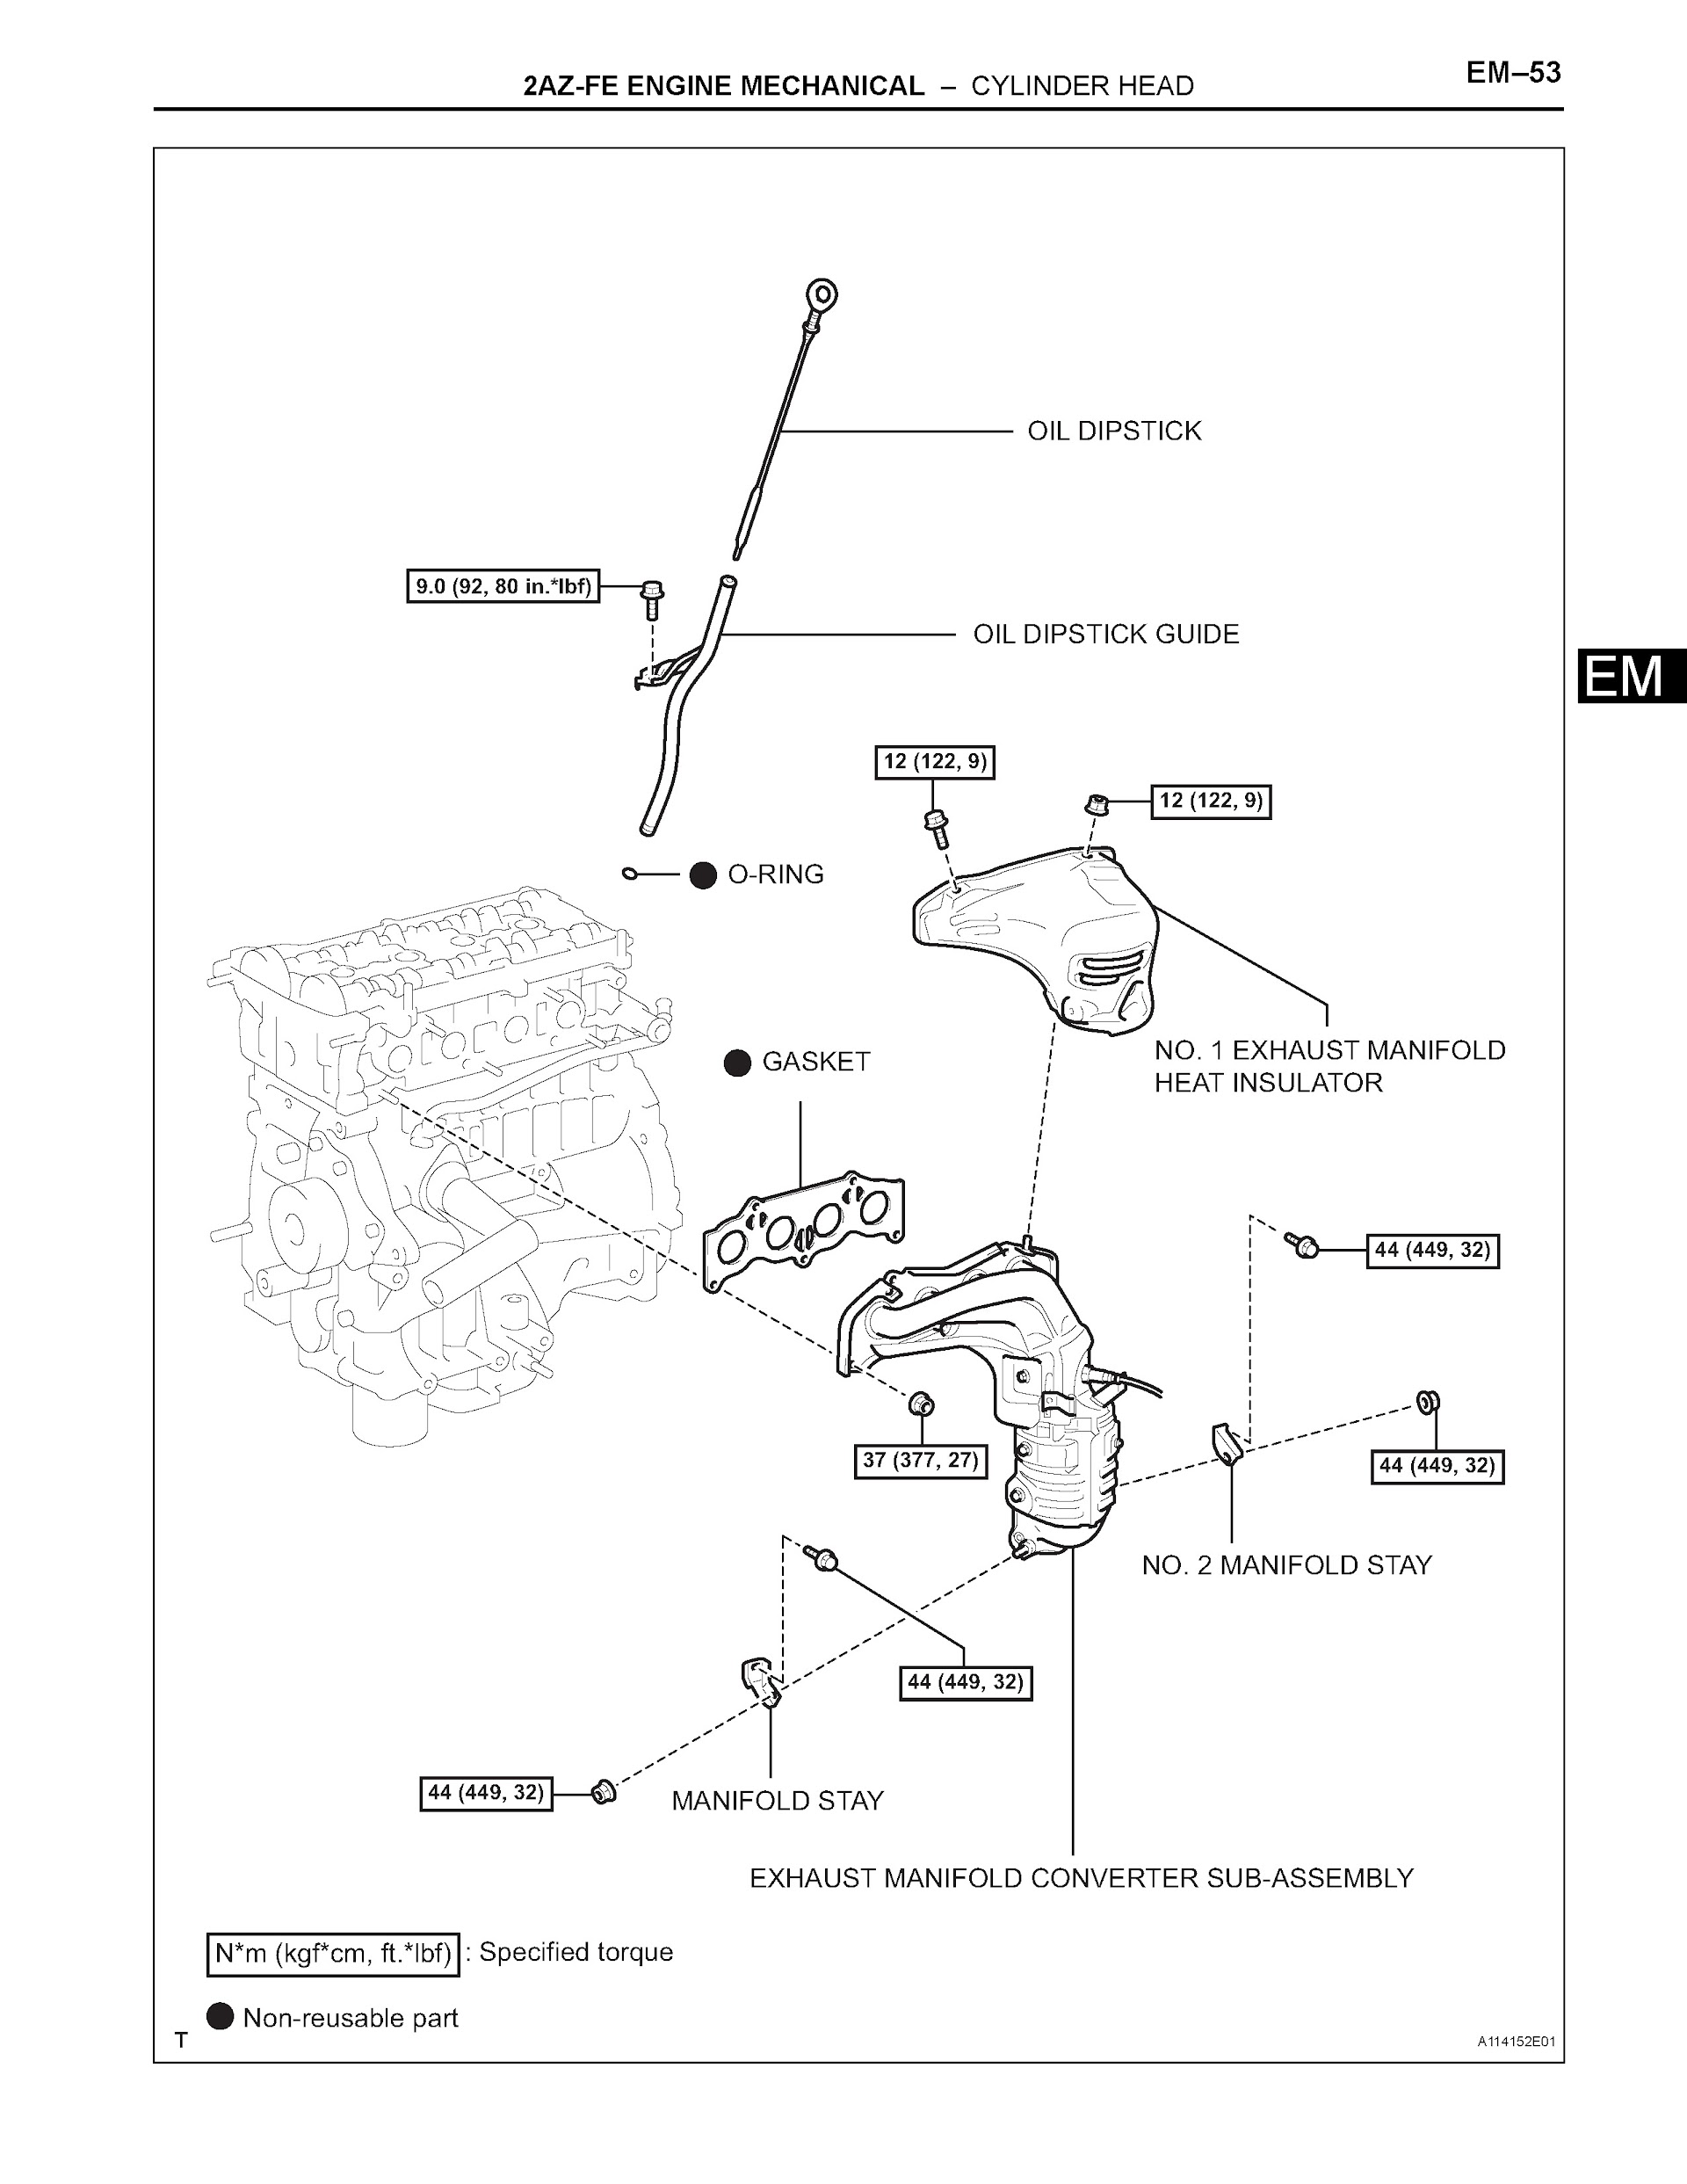 2005-2010 Toyota Scion tC Repair Manual 2AZ-FE Engine Mechanical - Cylinder Head